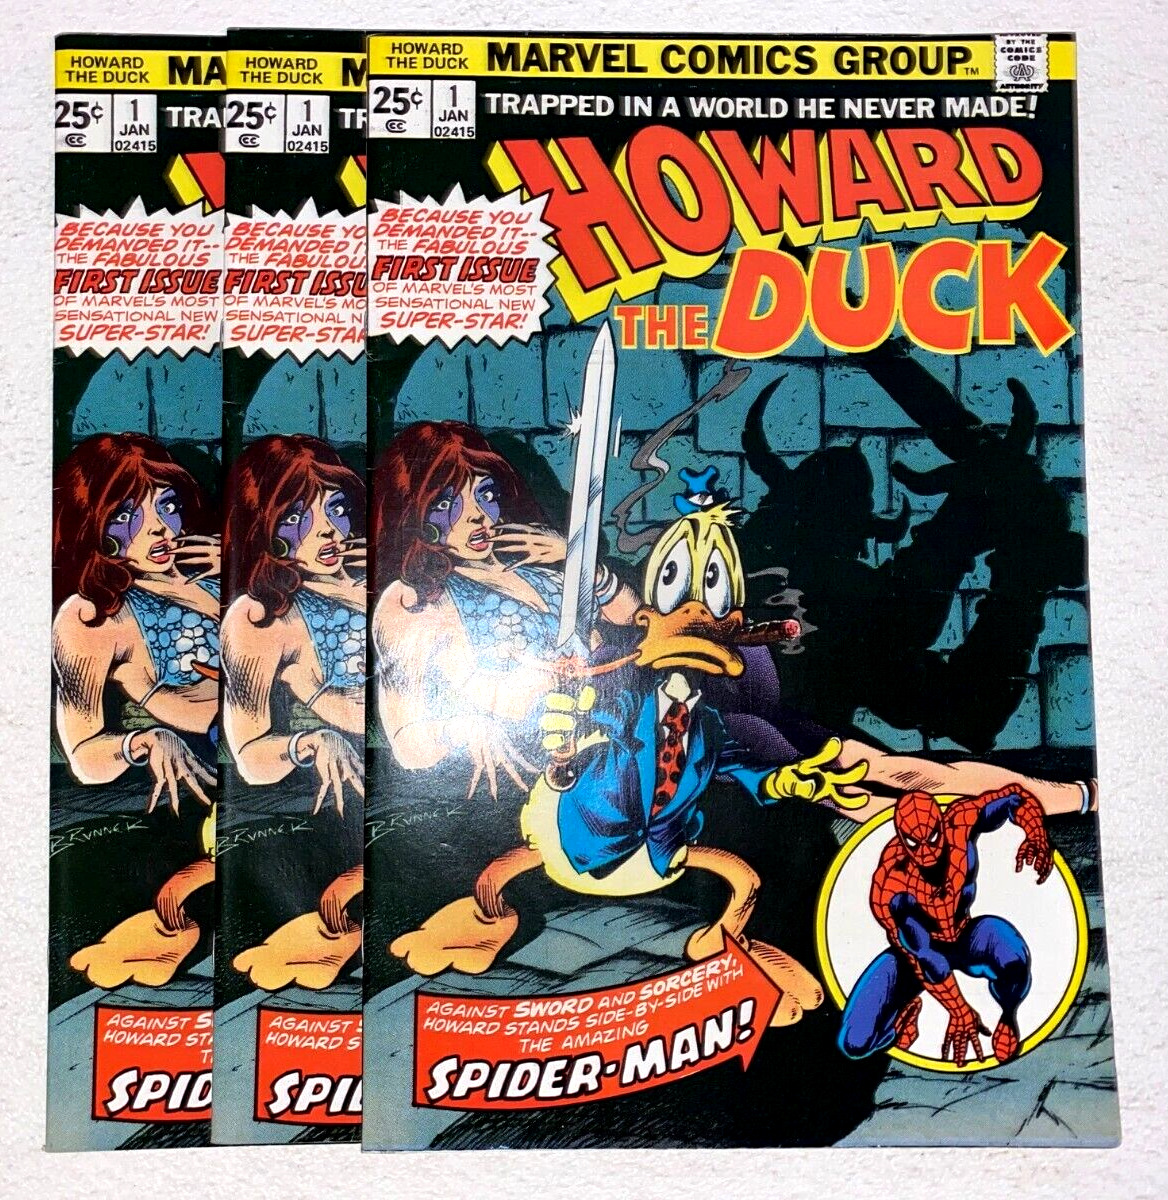 Howard the Duck #1 (Marvel, 1976) Lot of 3